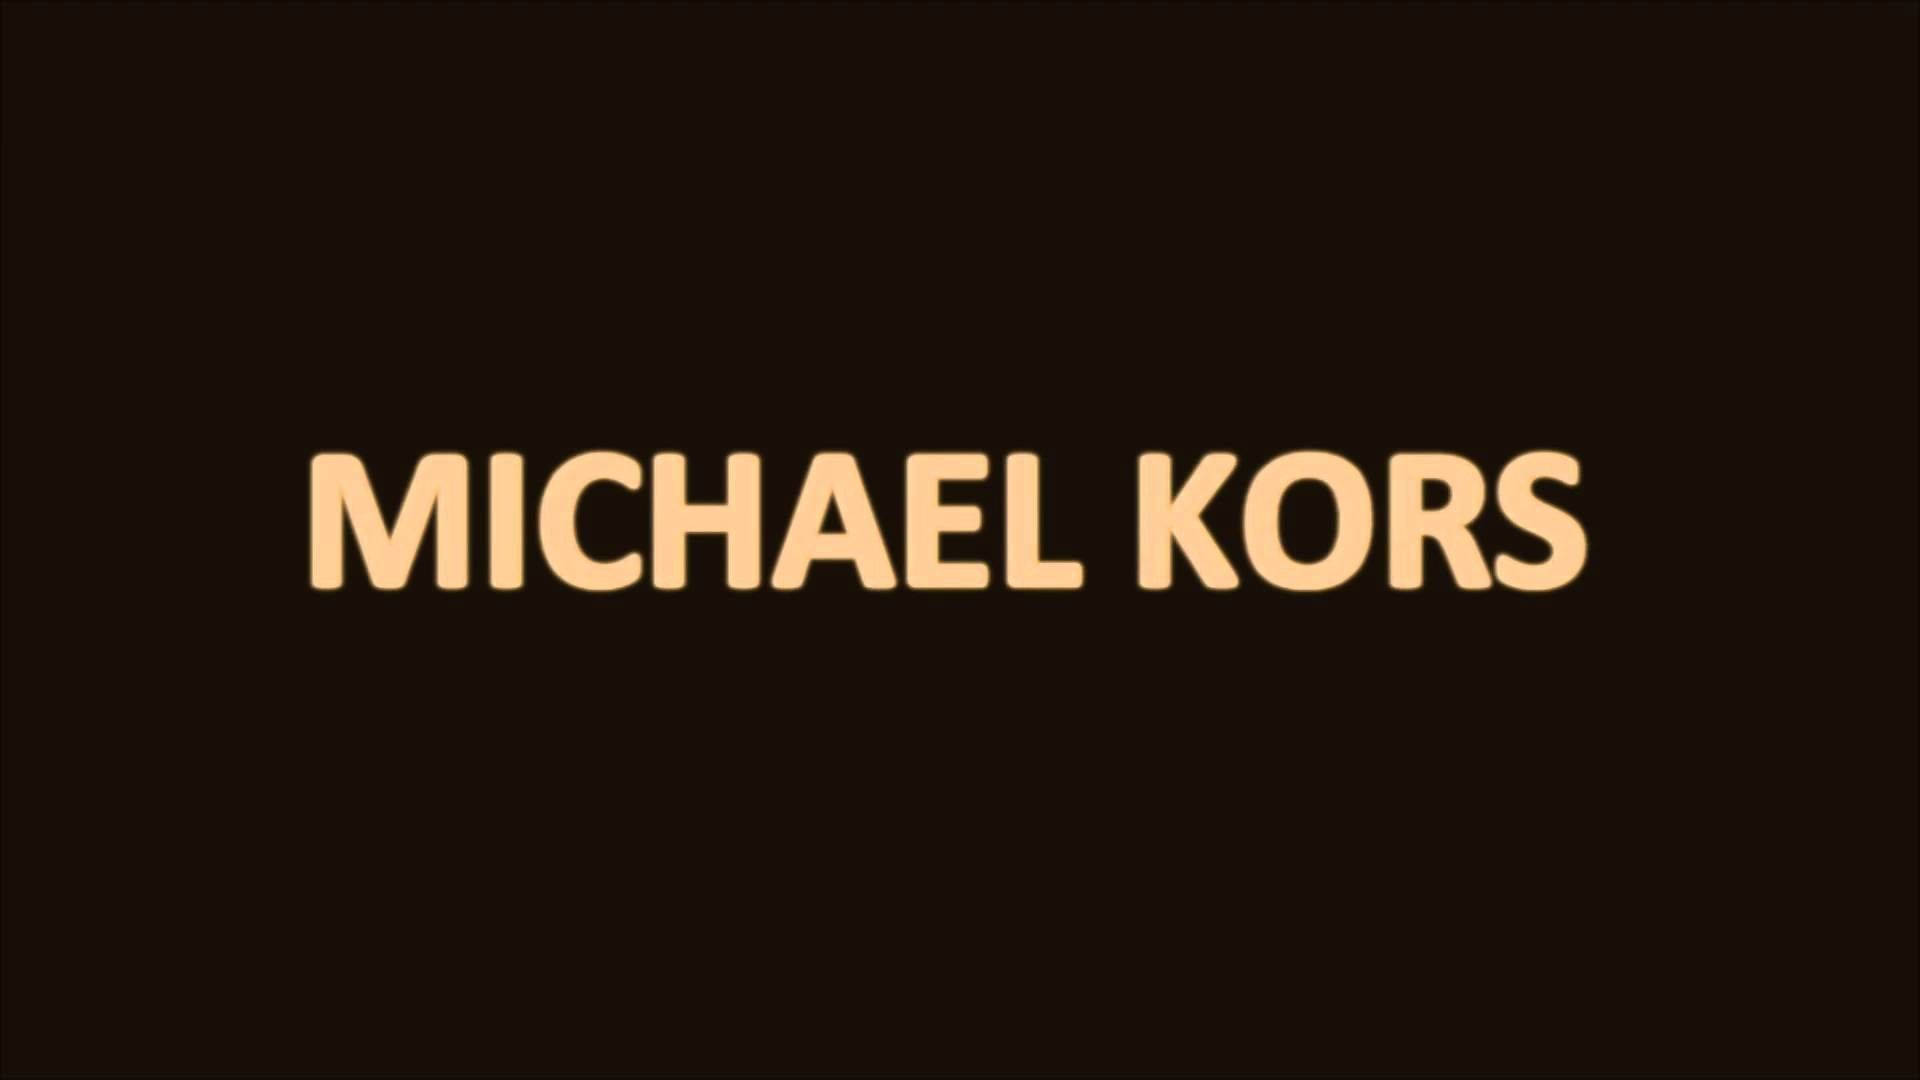 Michael Kors Background Wallpaper